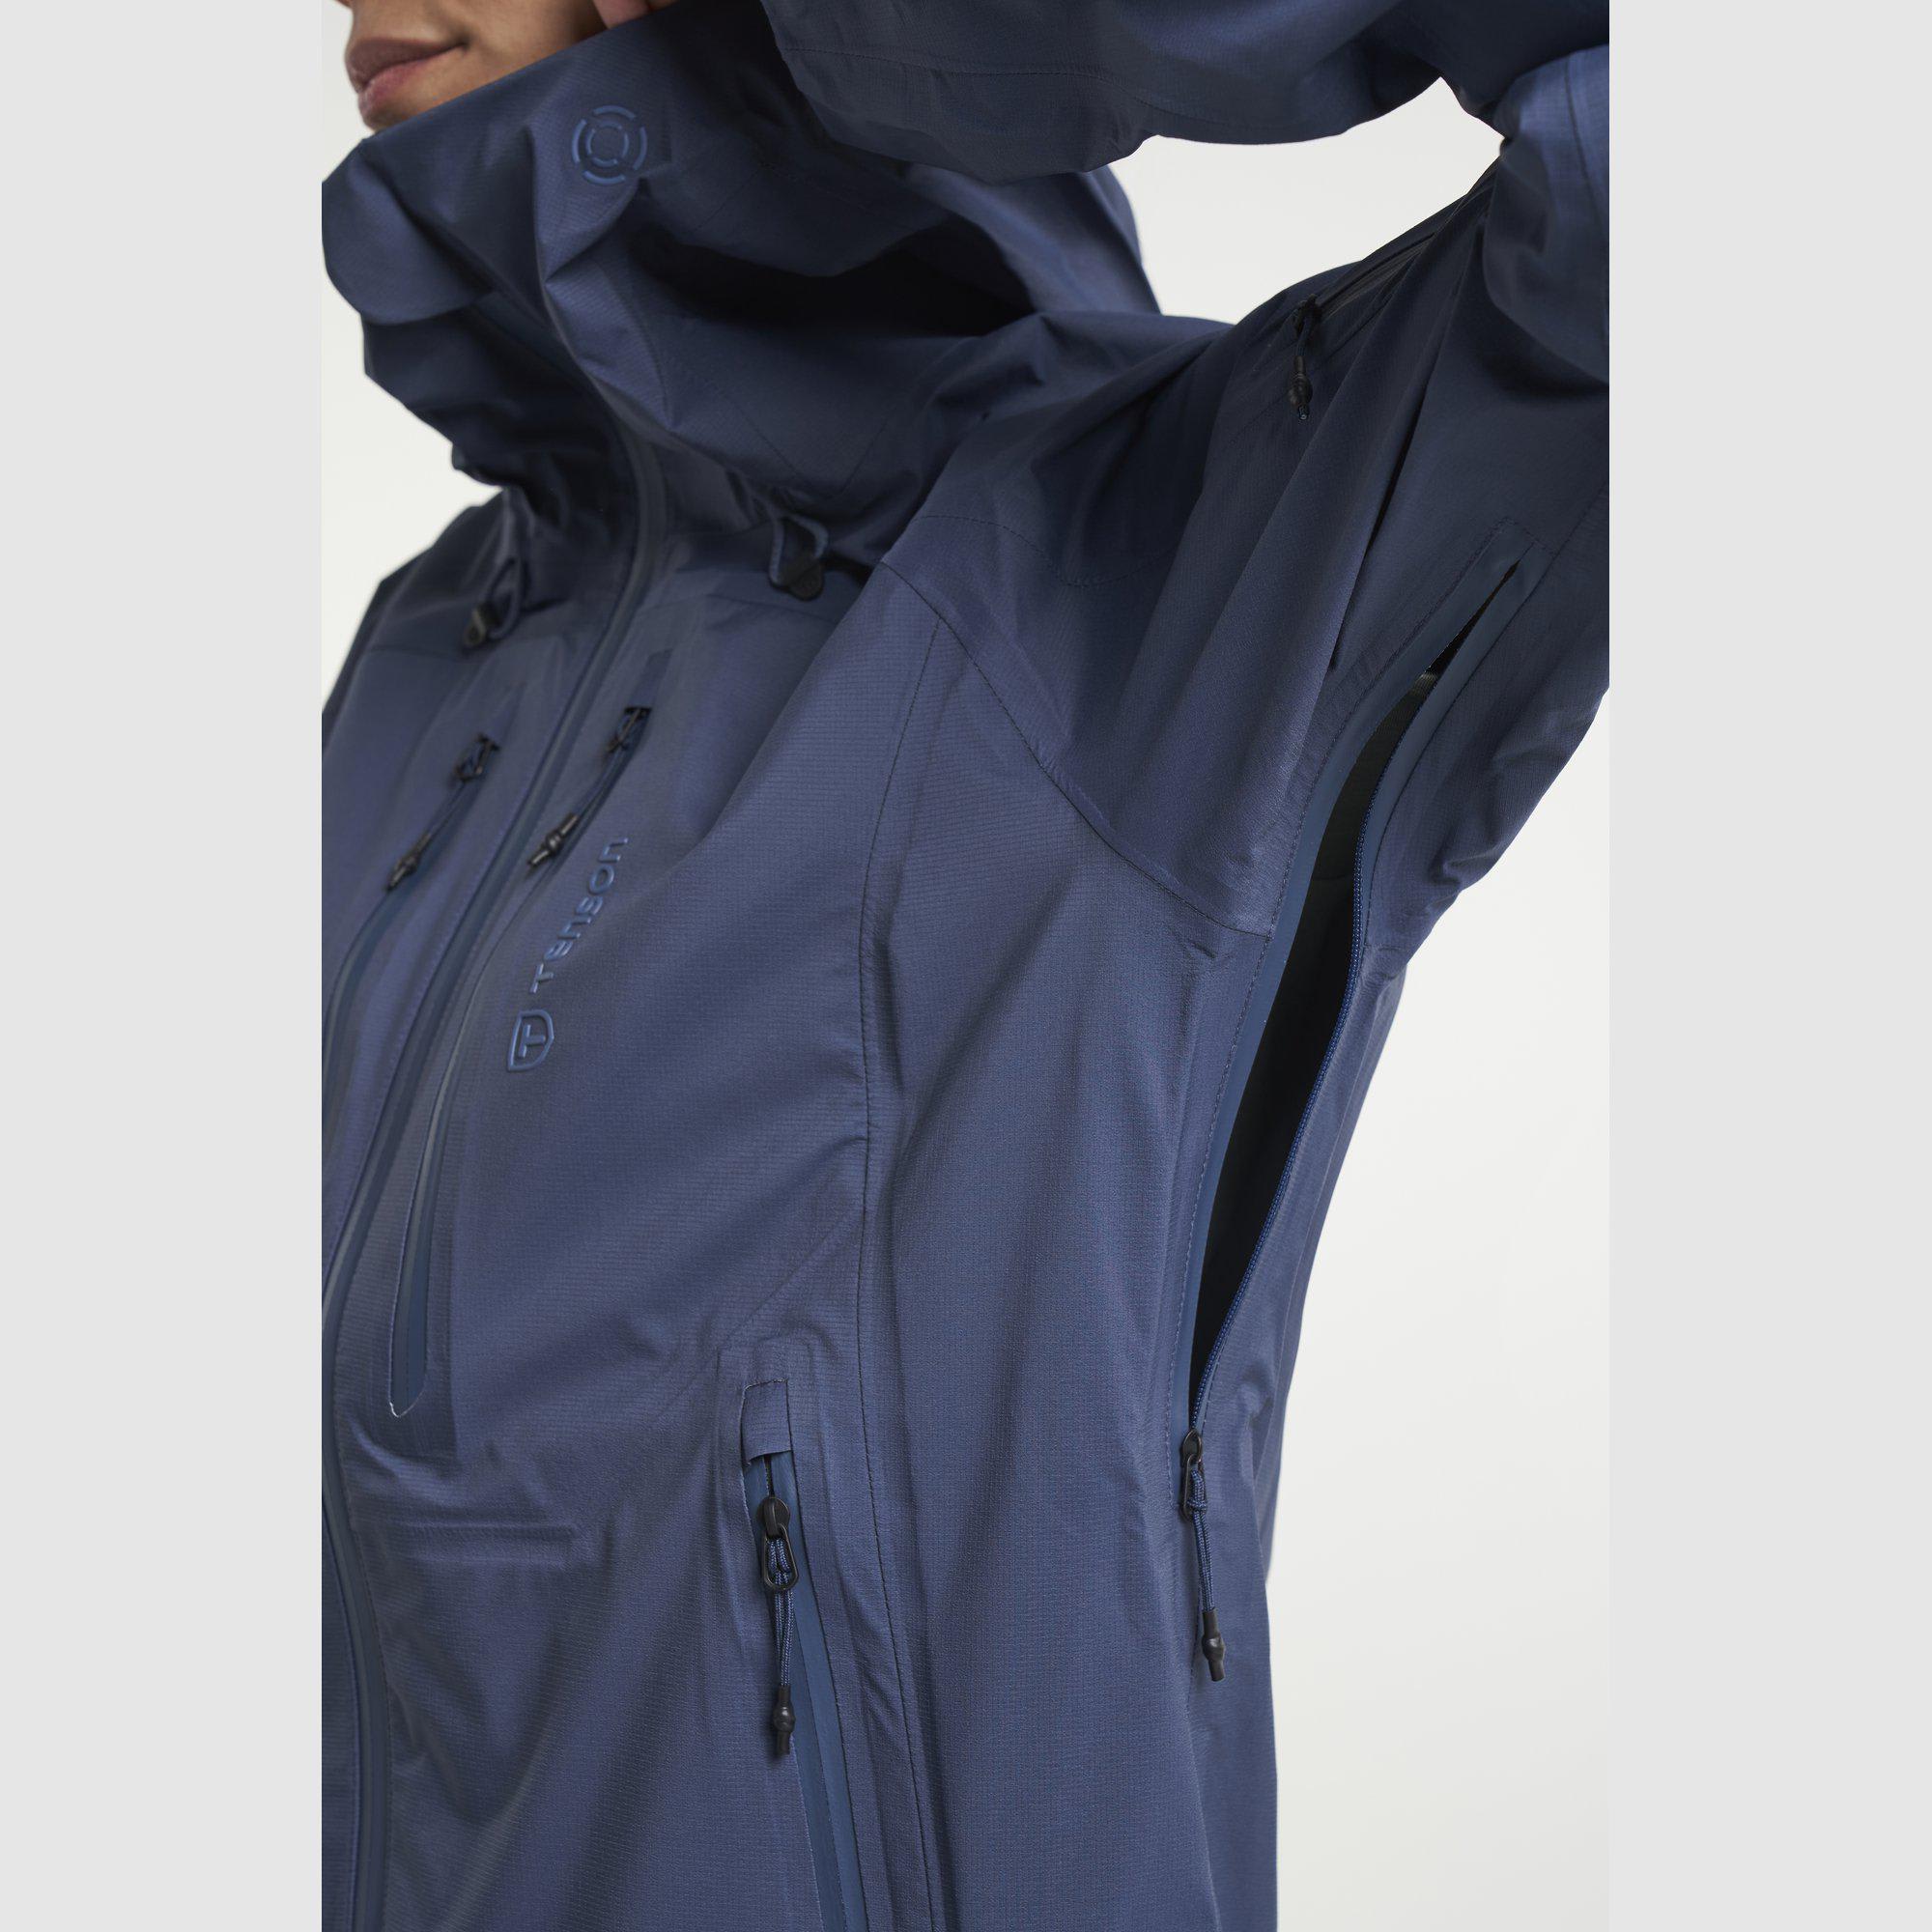 Txlite Skagway Jacket W, dark blue